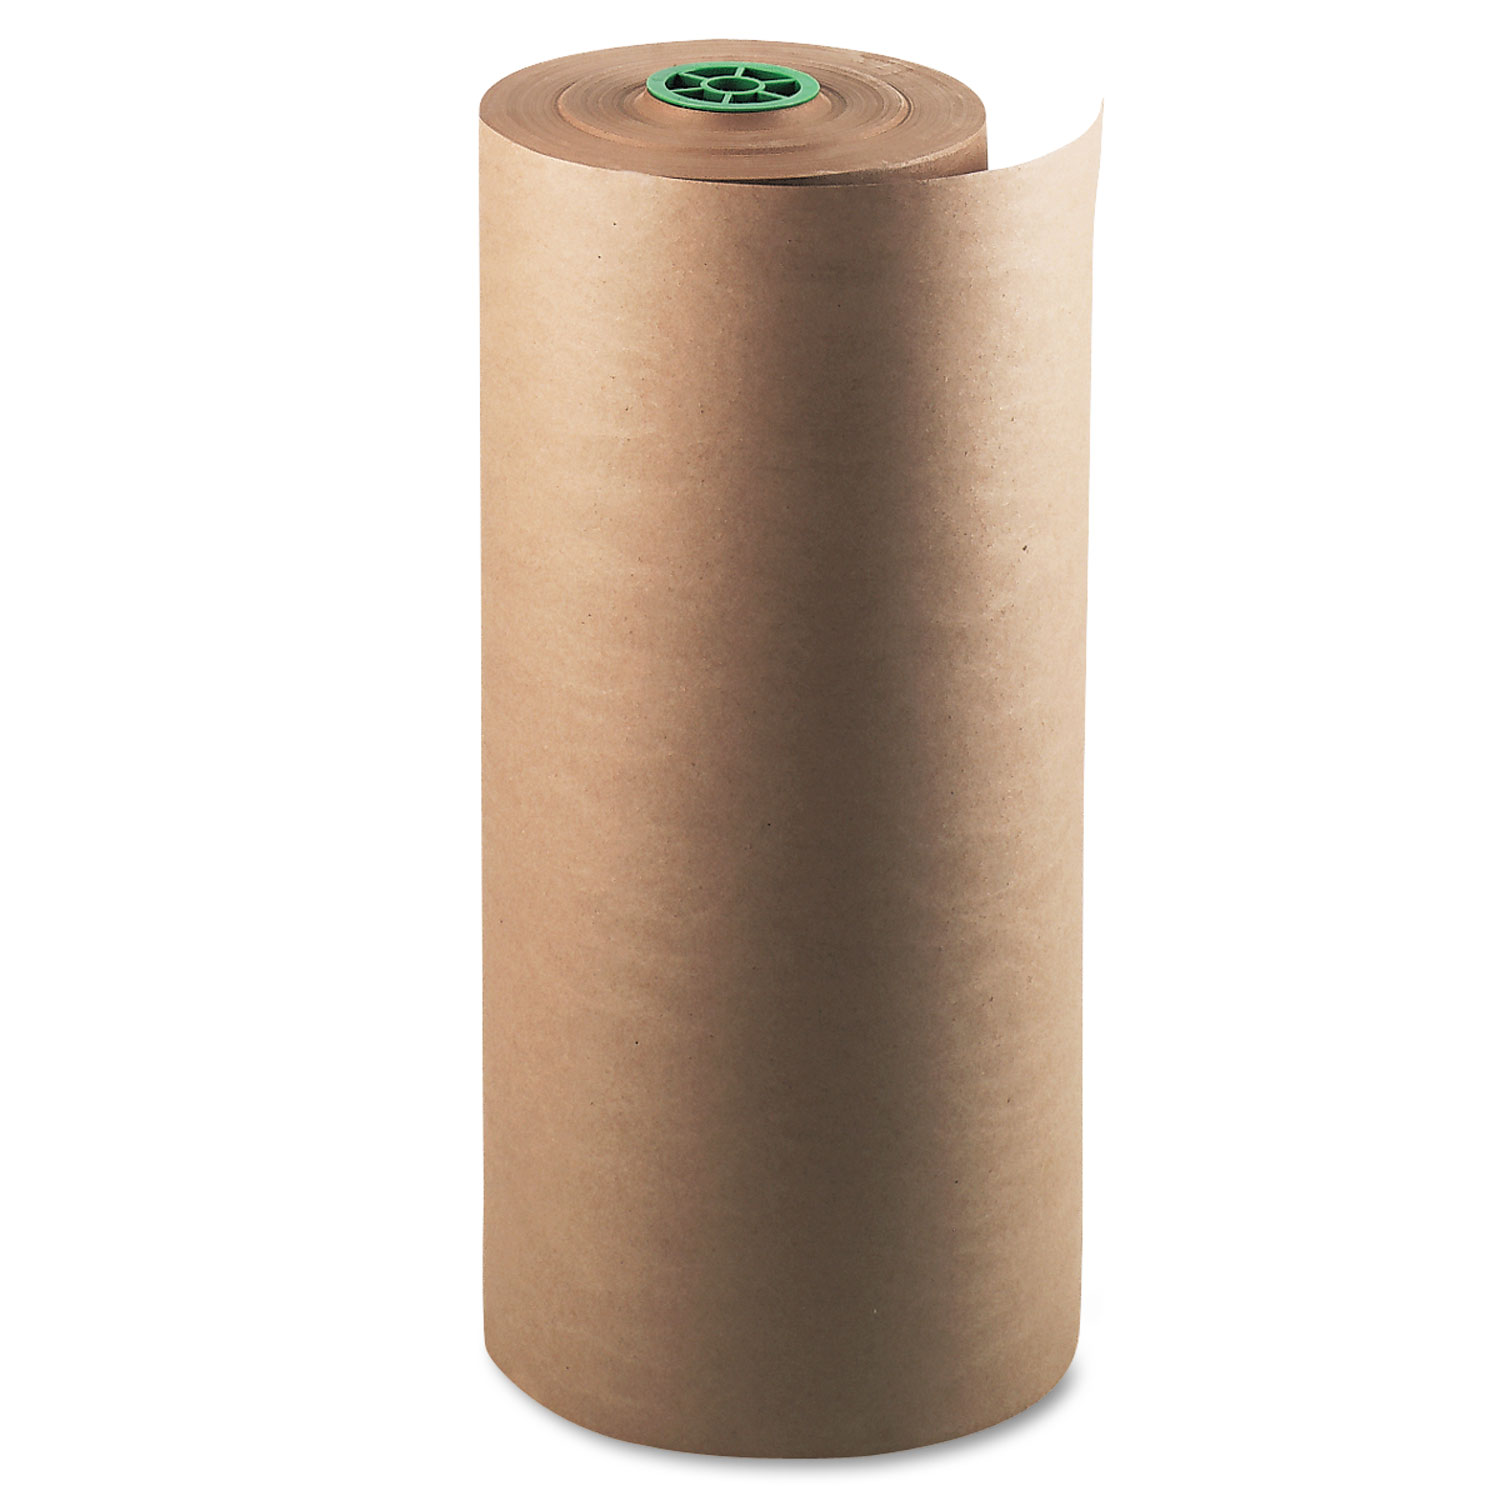  Pacon 5824 Kraft Paper Roll, 50lb, 24 x 1000ft, Natural (PAC5824) 